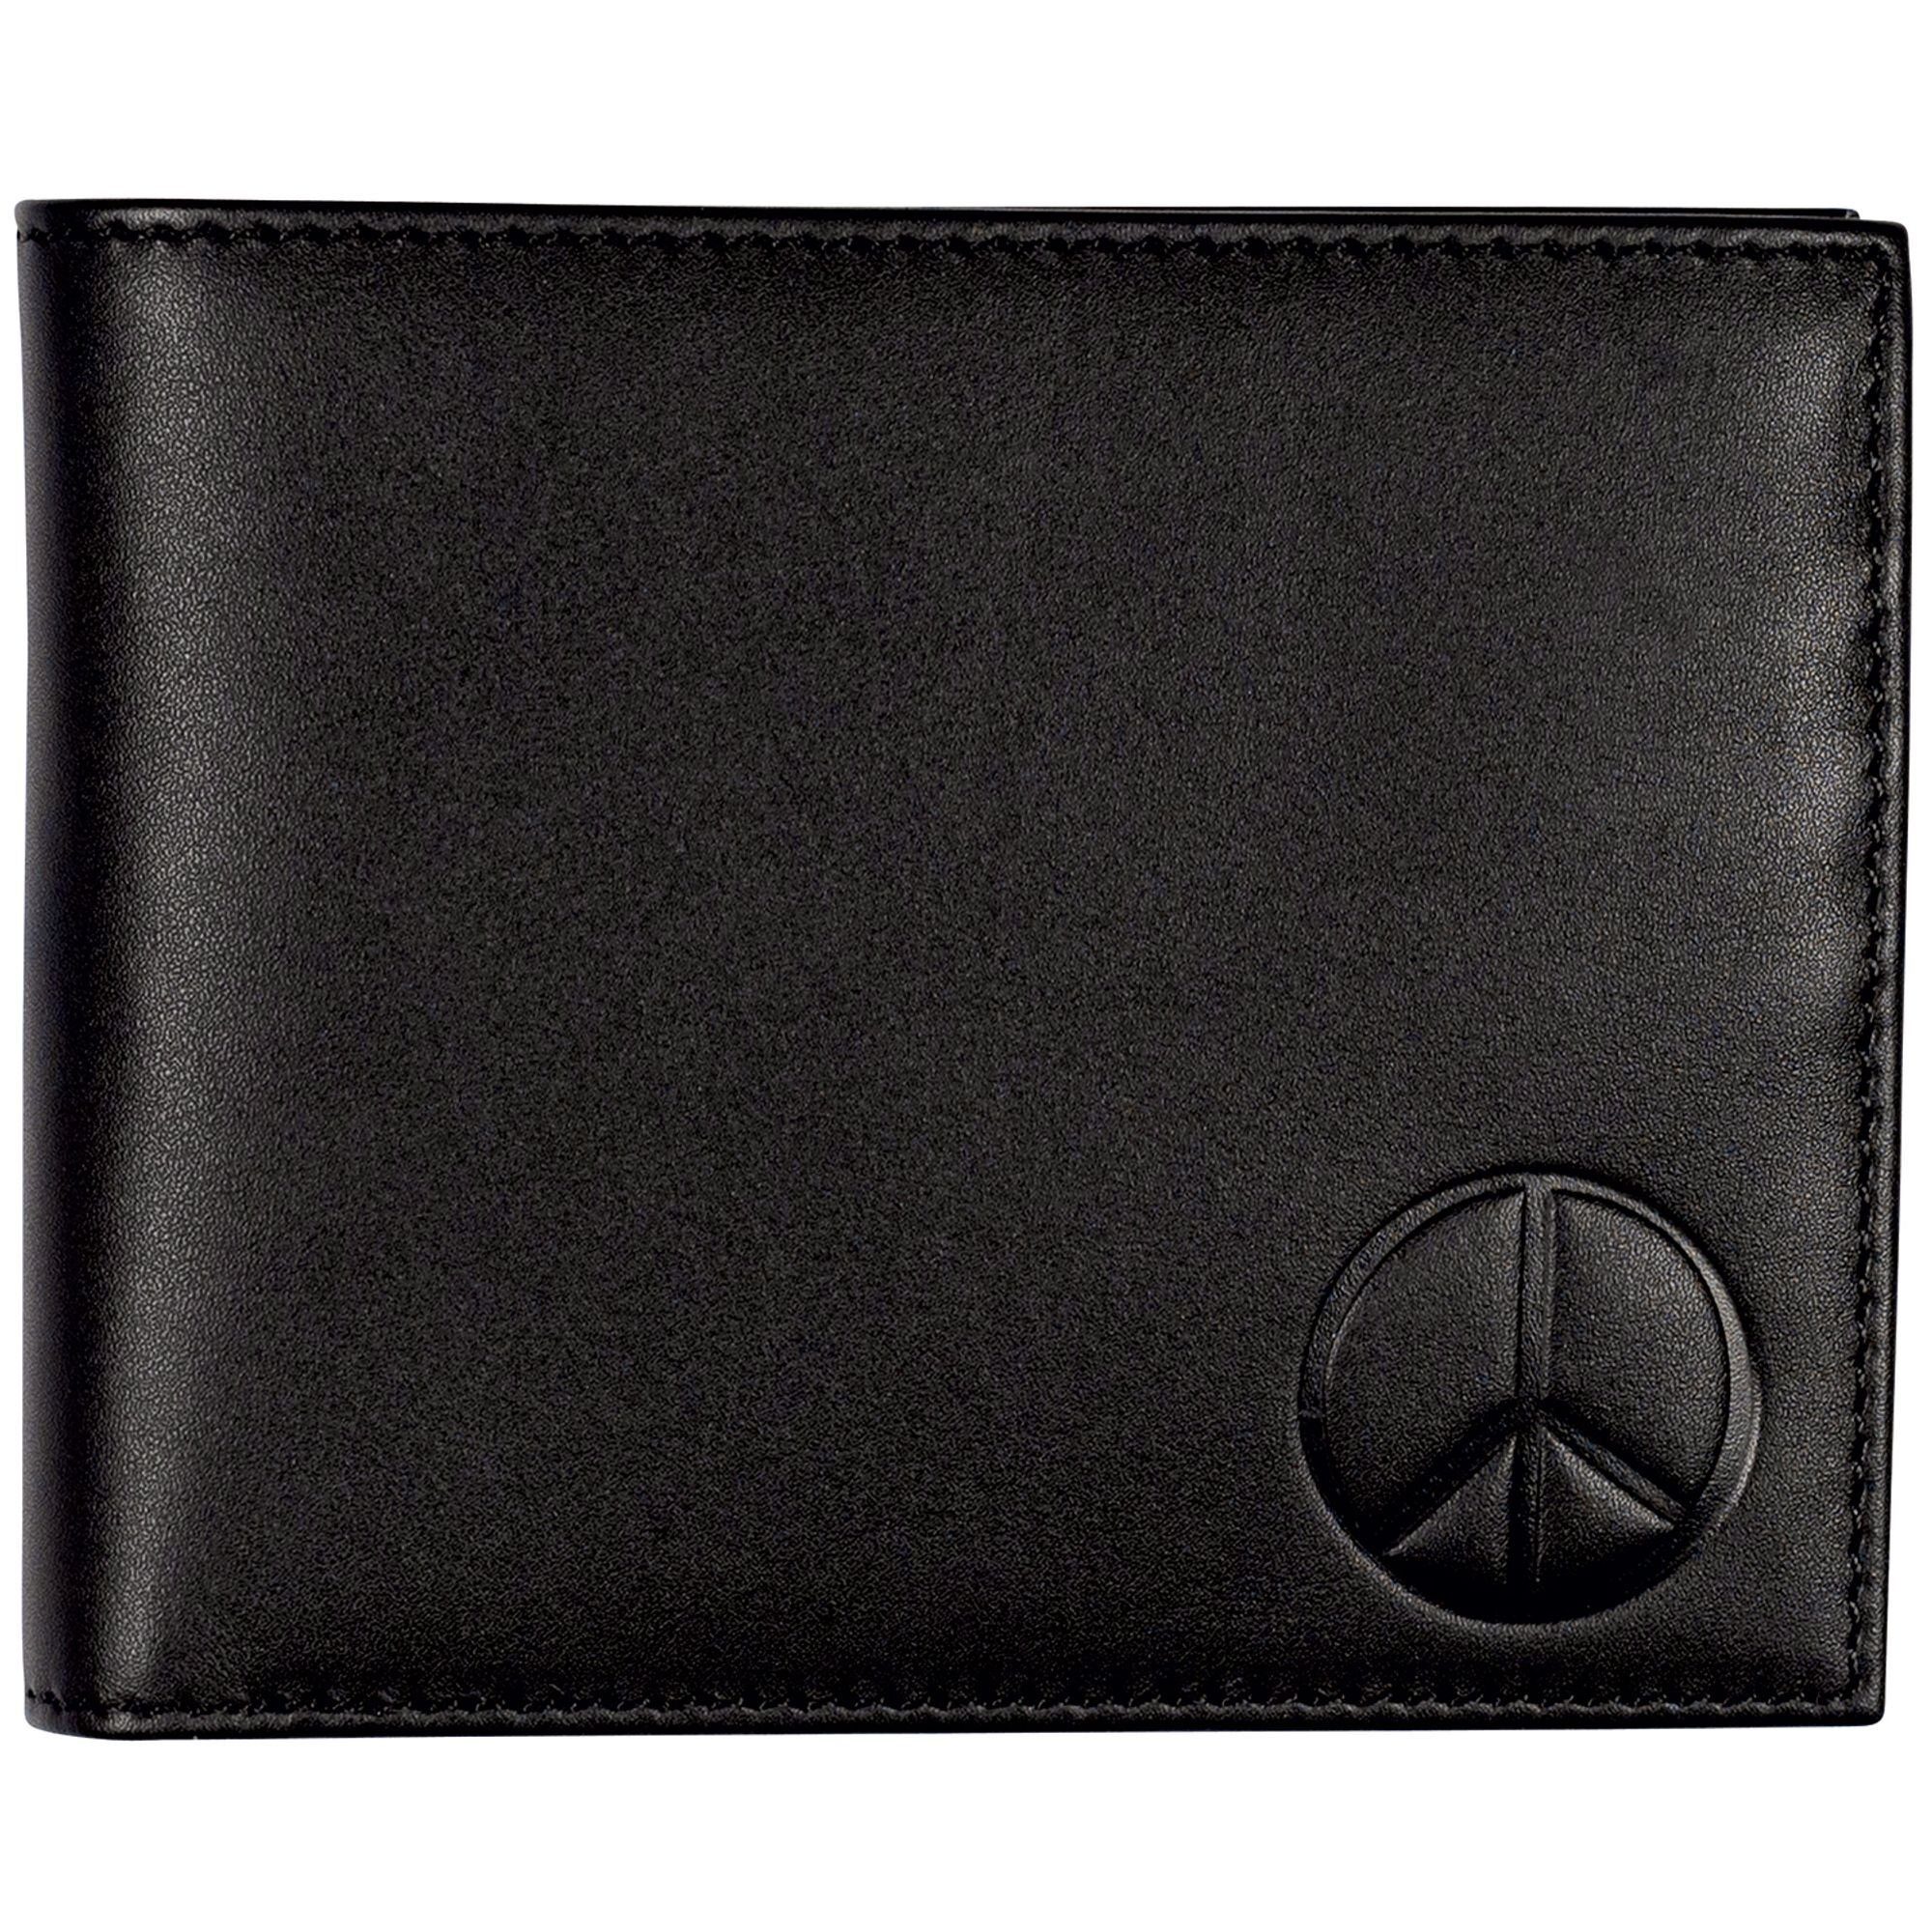 Geldbörse peace OXMOX Leather, Leder